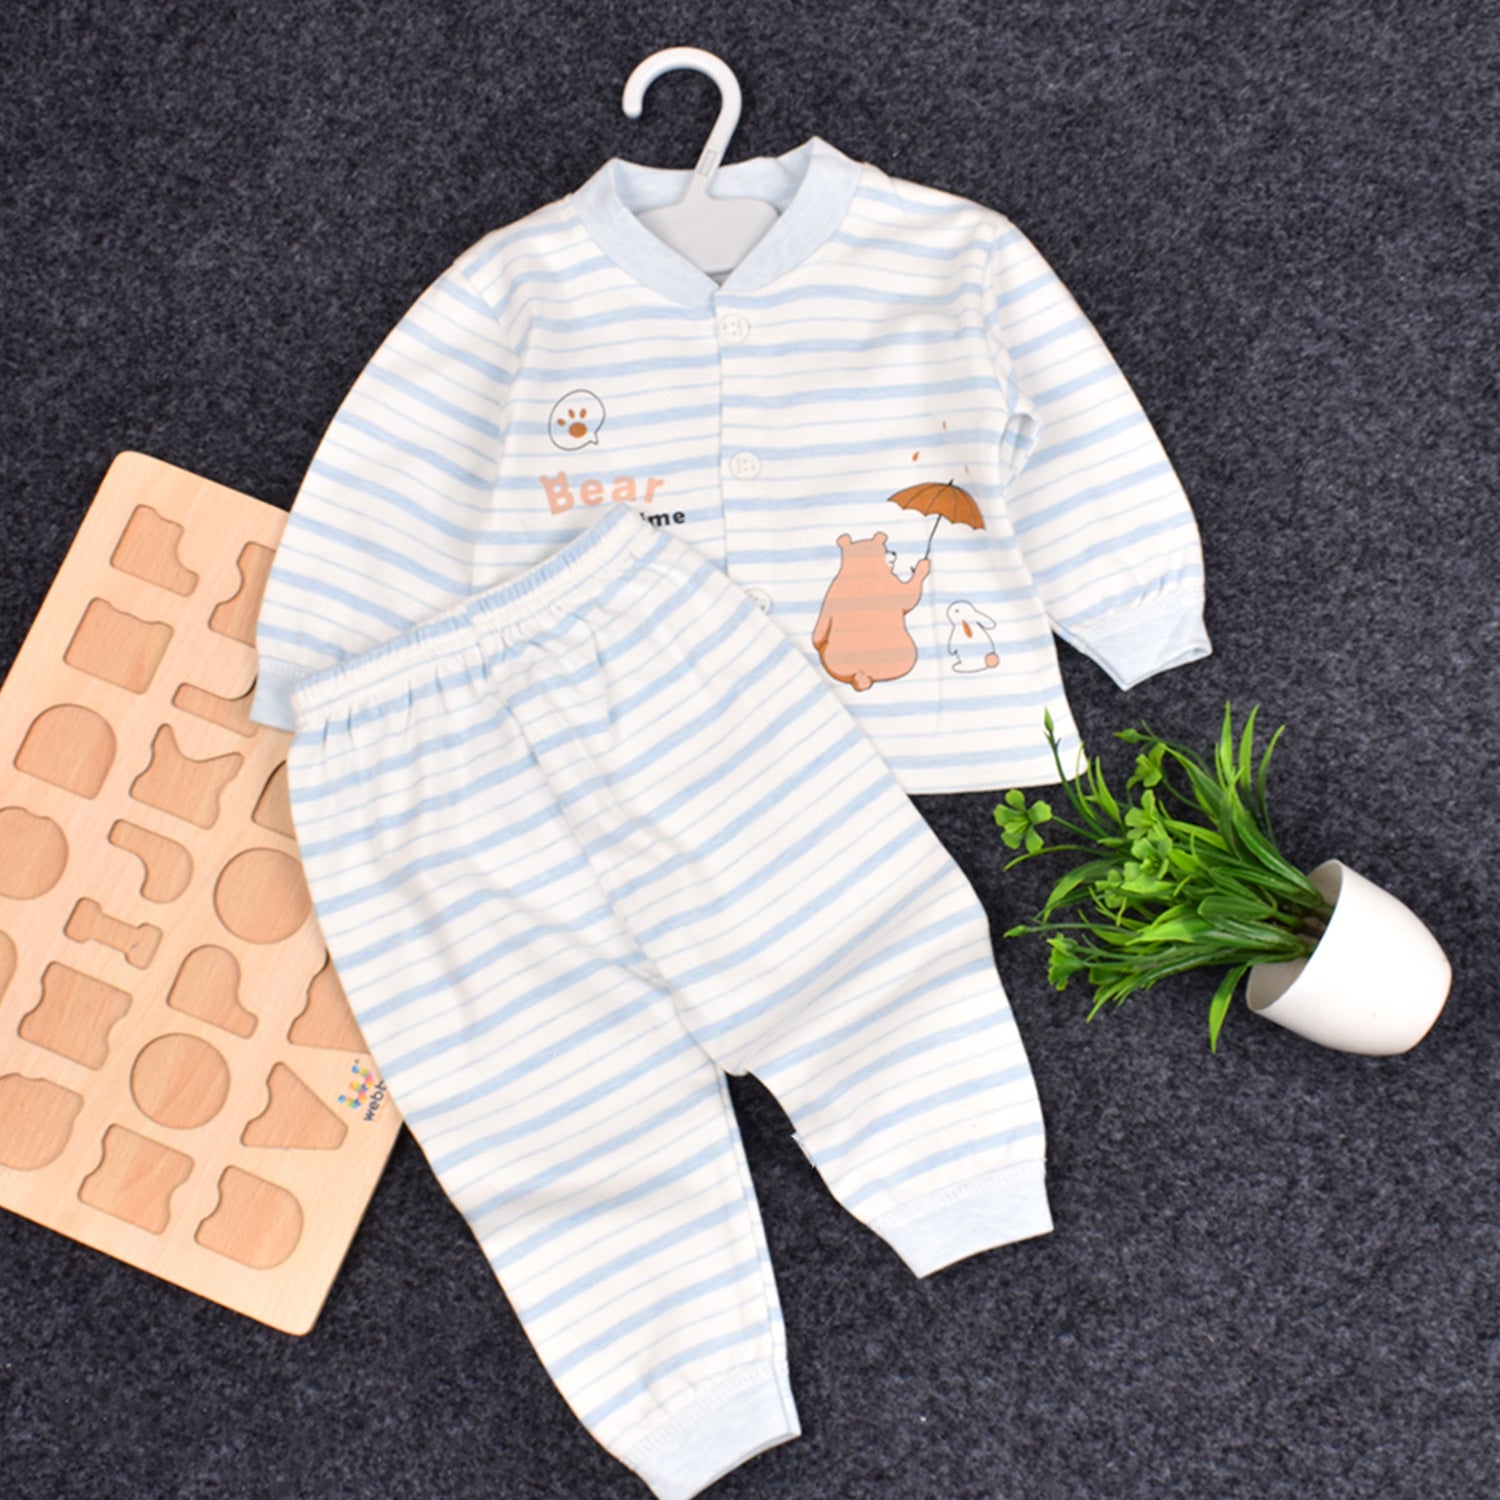 Baby's Warm Unisex Cotton Suit Set - 1 Pajama and 1 Shirt - Blue